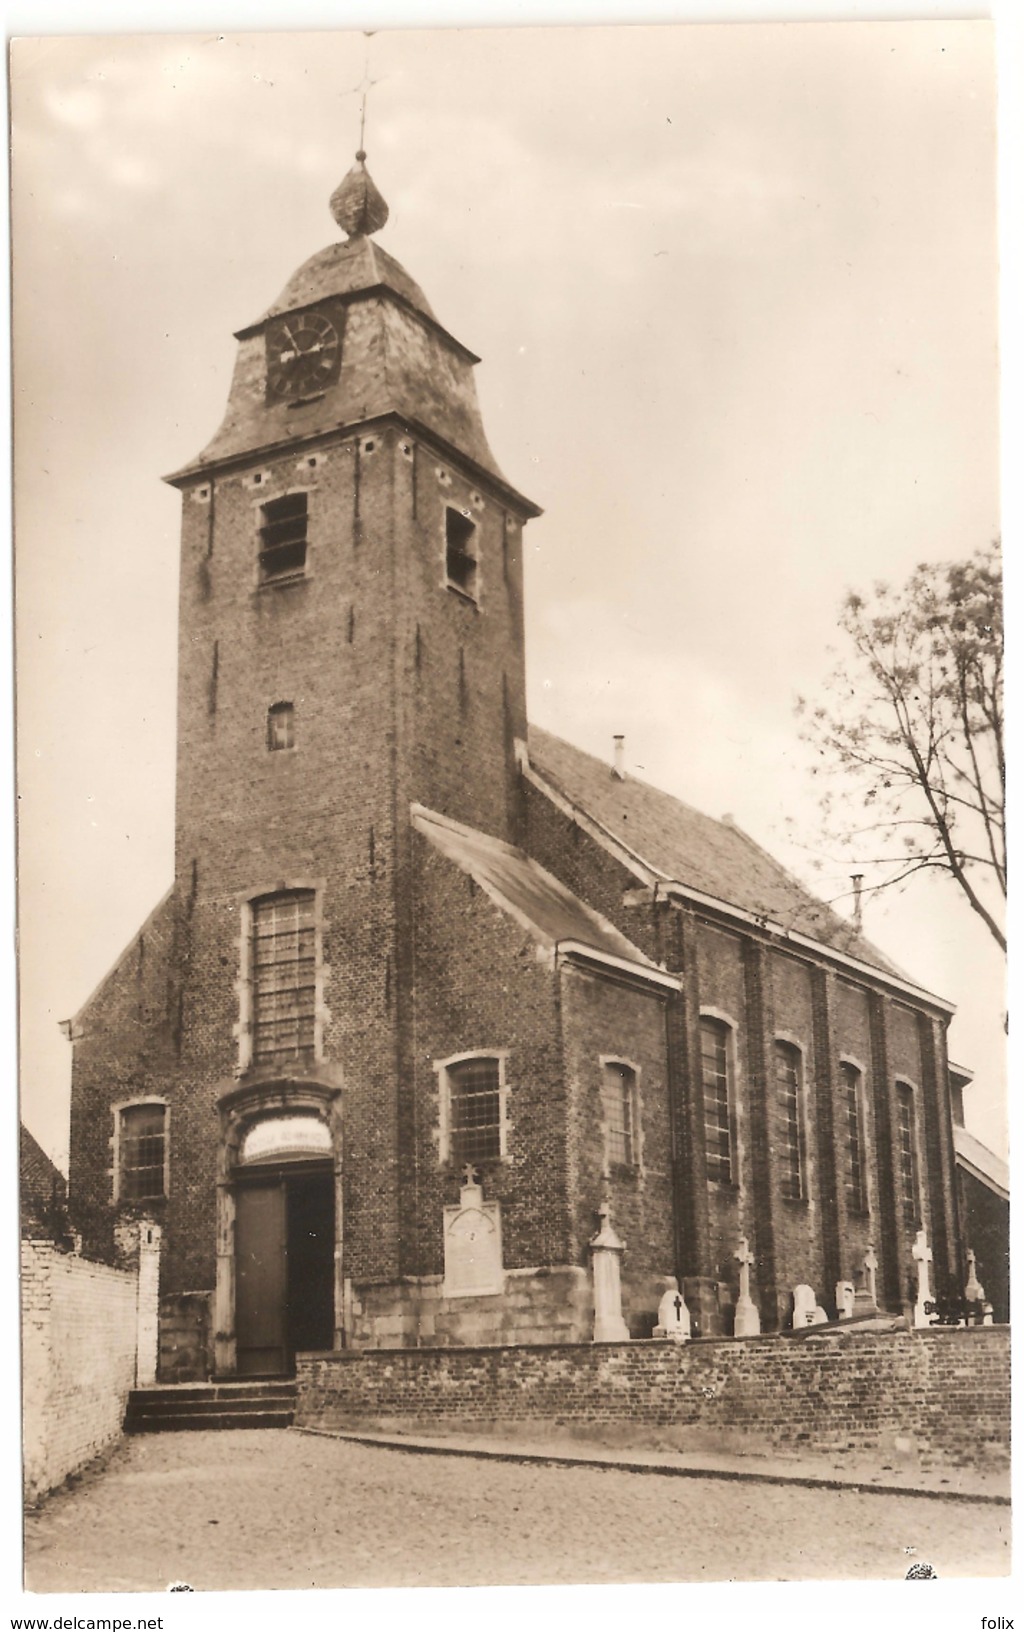 Leerbeek - Kerk - Echte Photo - Uitgave E.D.W. Kester - Gooik